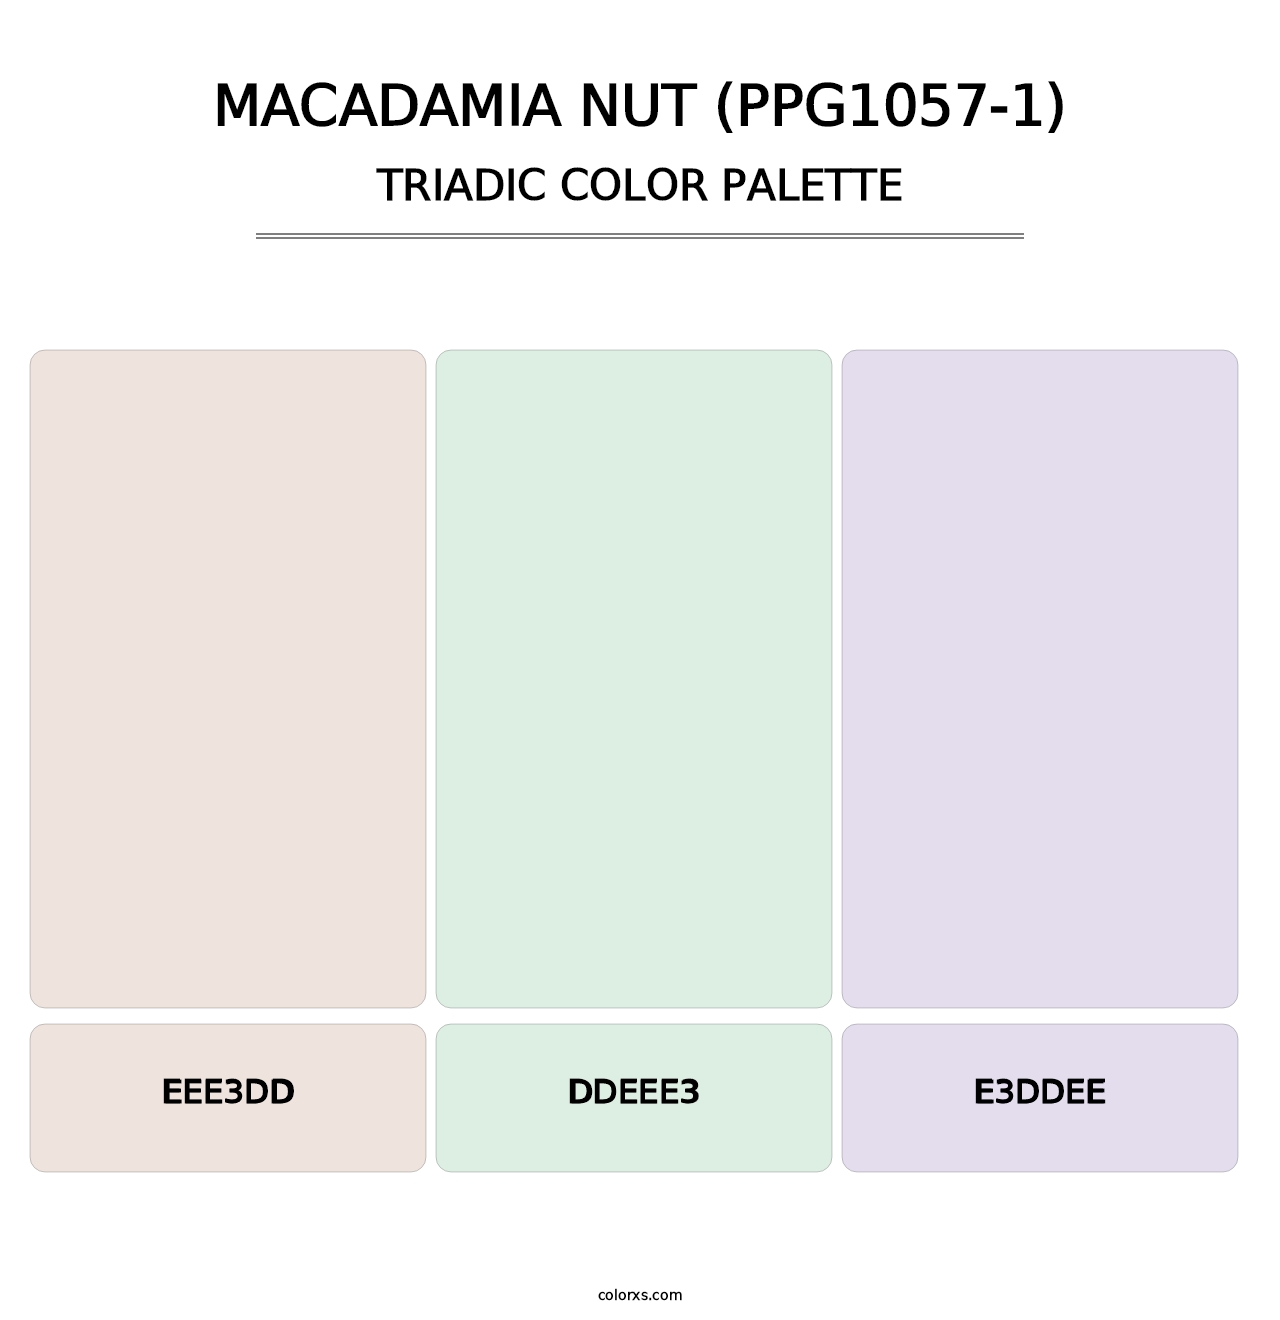 Macadamia Nut (PPG1057-1) - Triadic Color Palette